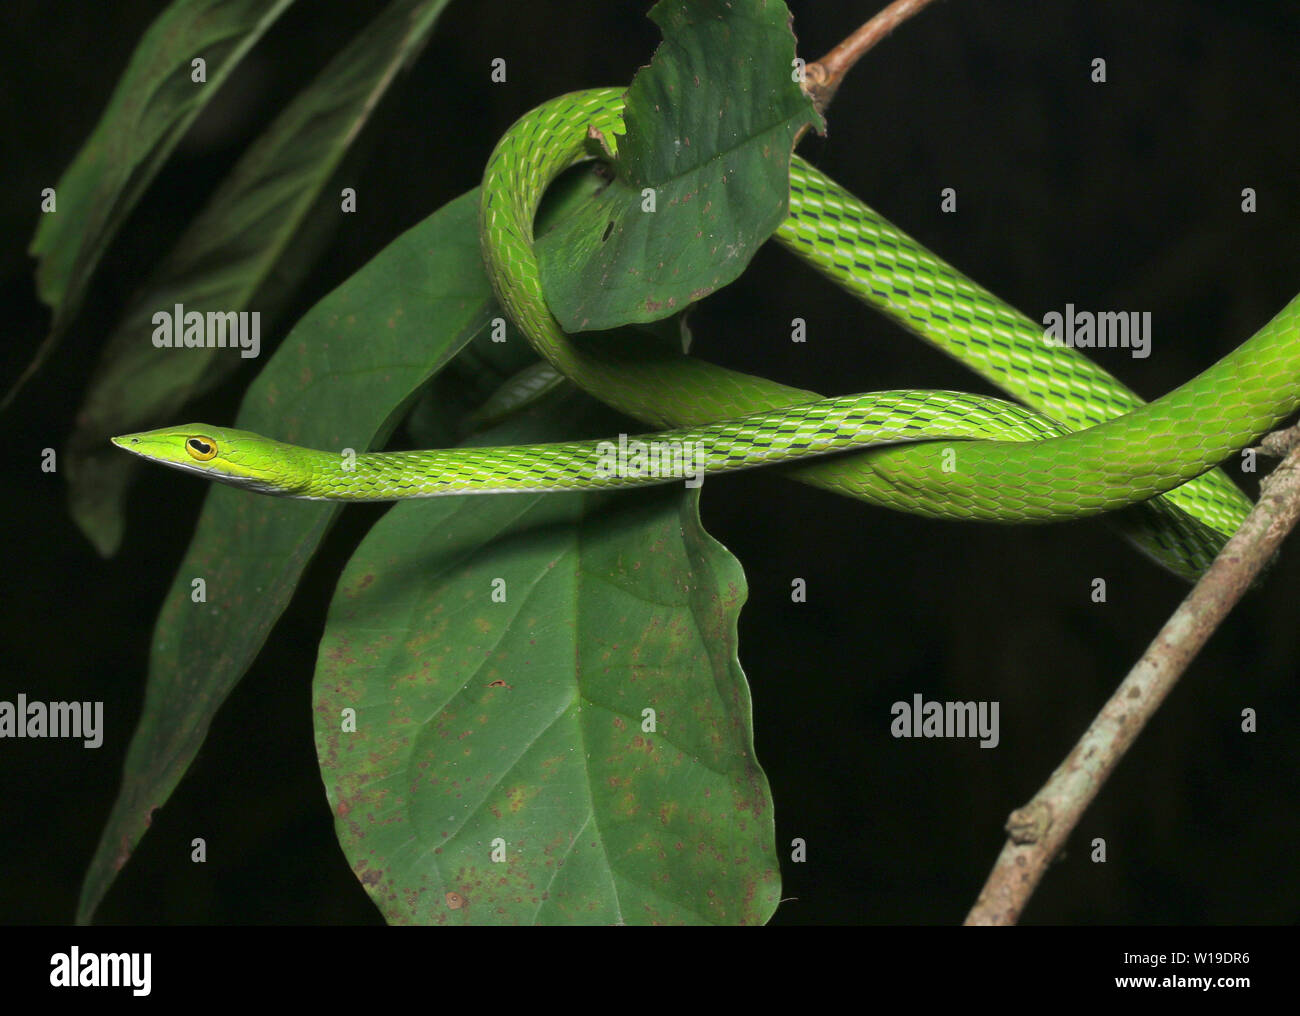 Vite comune serpente a becco lungo serpente frusta, Foto Stock